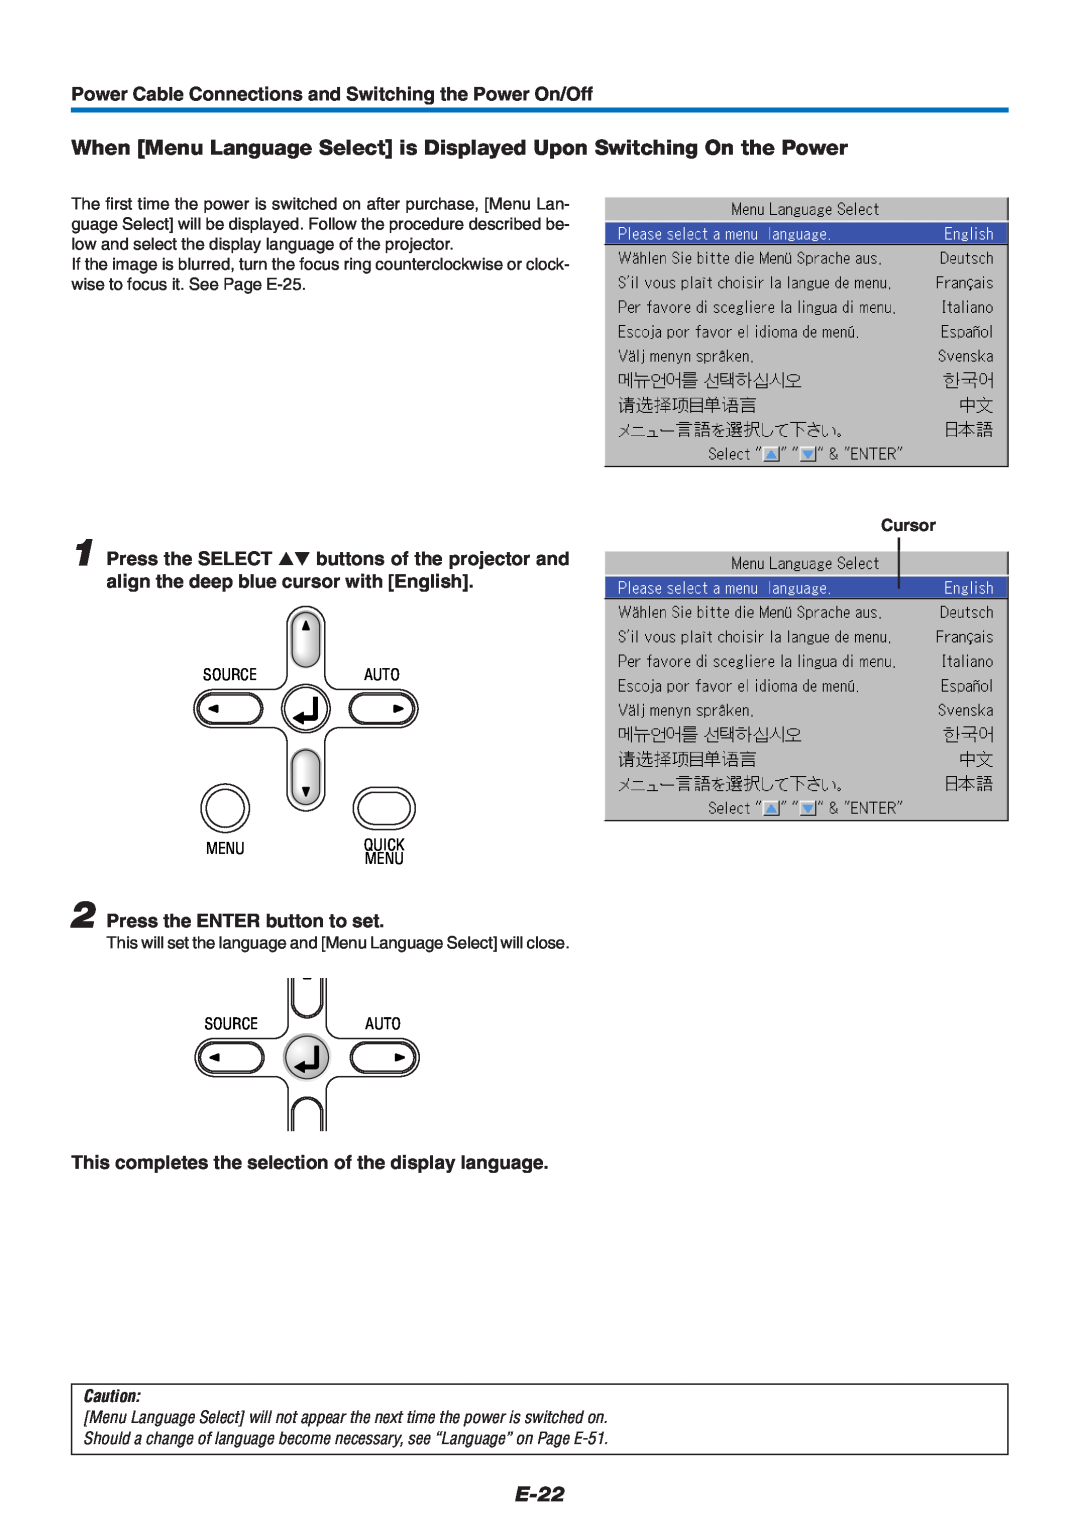 Mitsubishi Electronics XD60U user manual When Menu Language Select is Displayed Upon Switching On the Power, E-22, Cursor 